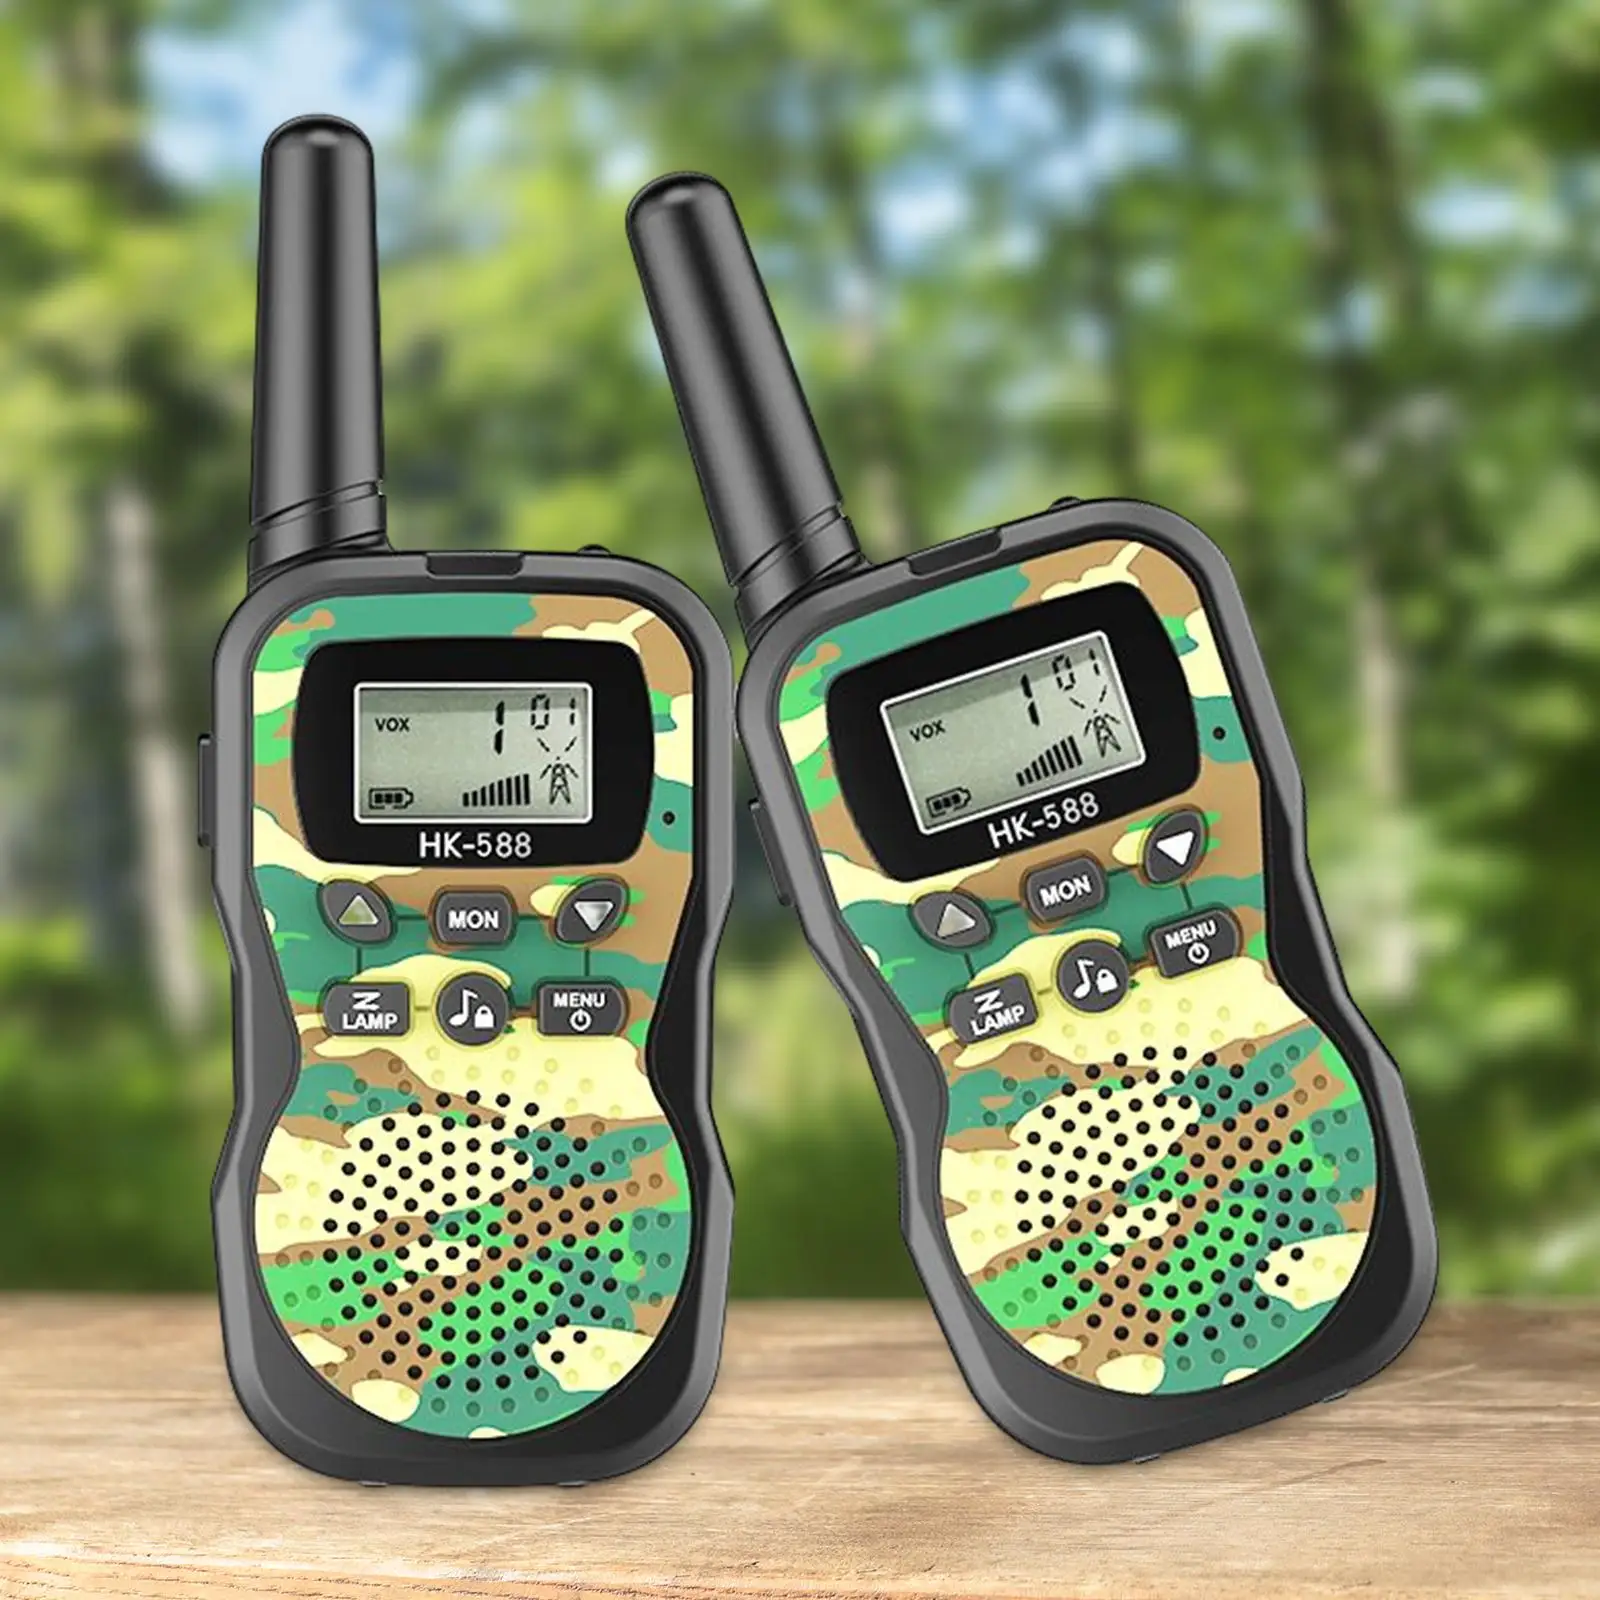 Outdoor Kids Walkie Talkies Toy Two Way Radios Good Performance Long Range